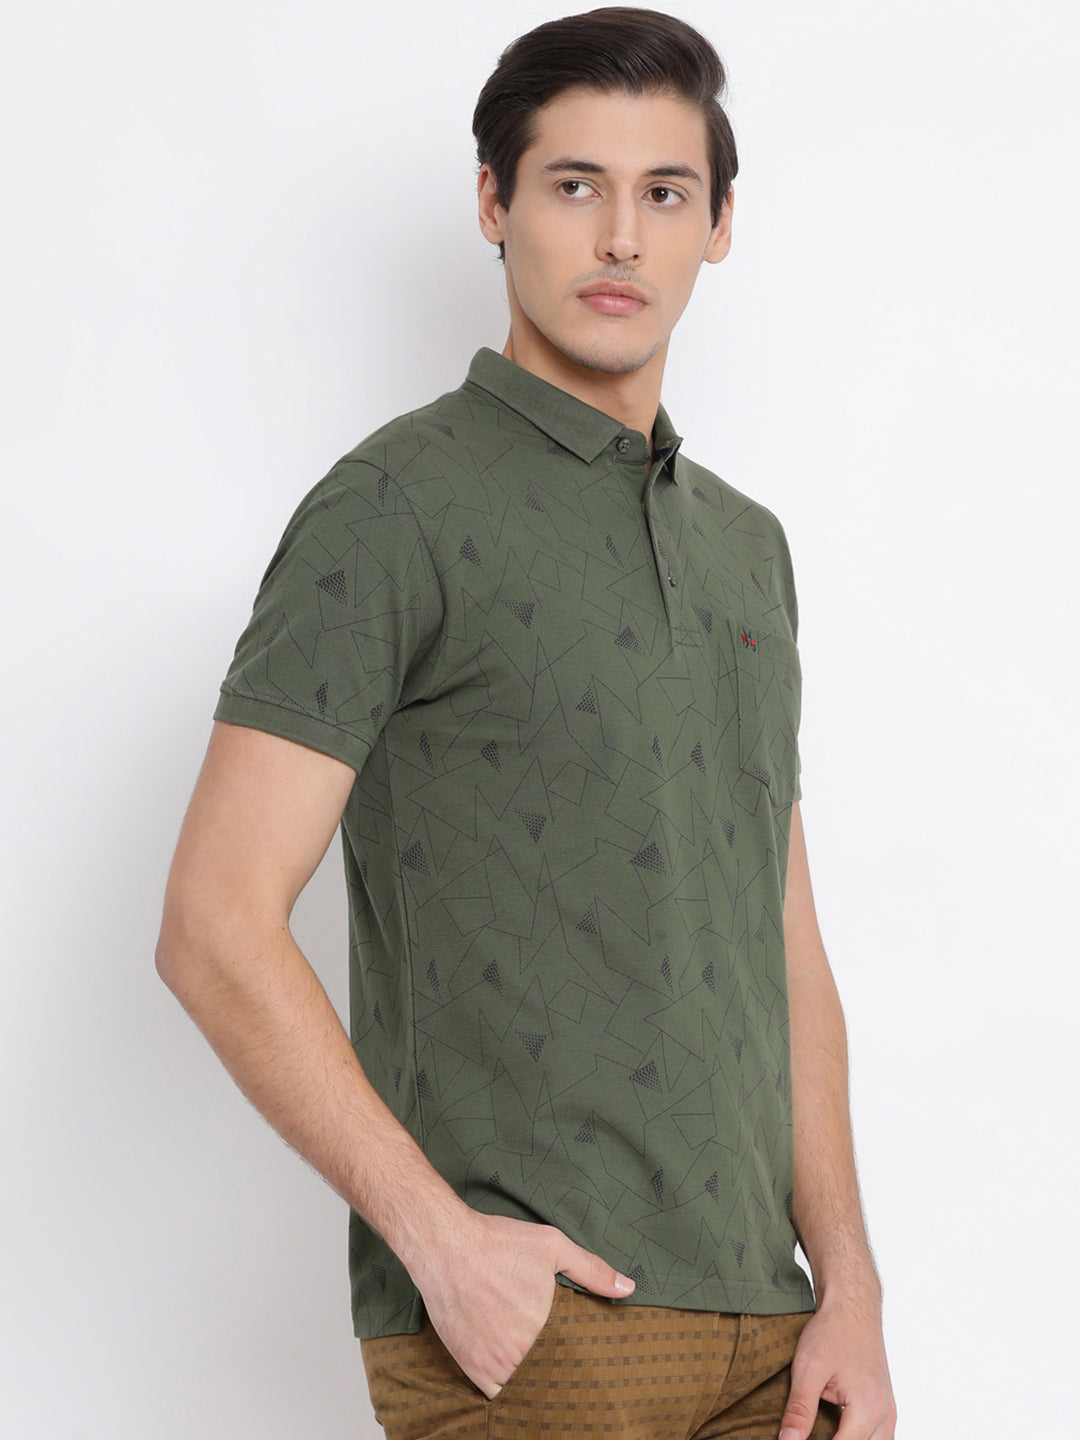 Green Printed T-shirt - Men T-Shirts